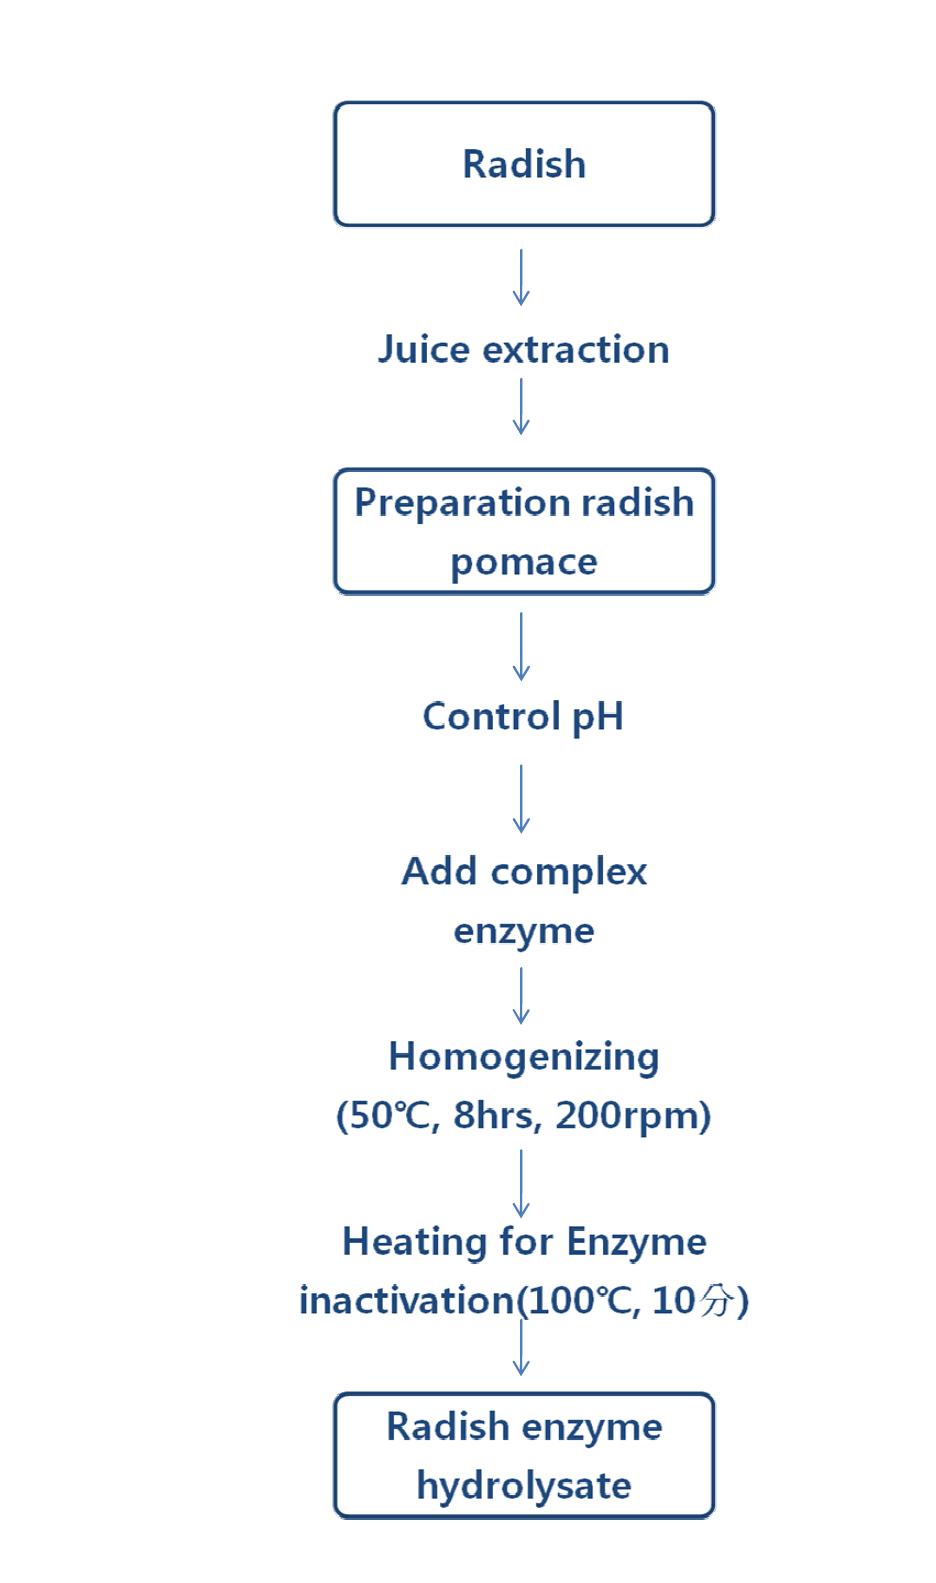 Radish enzyme hydrolysate preparation scheme.